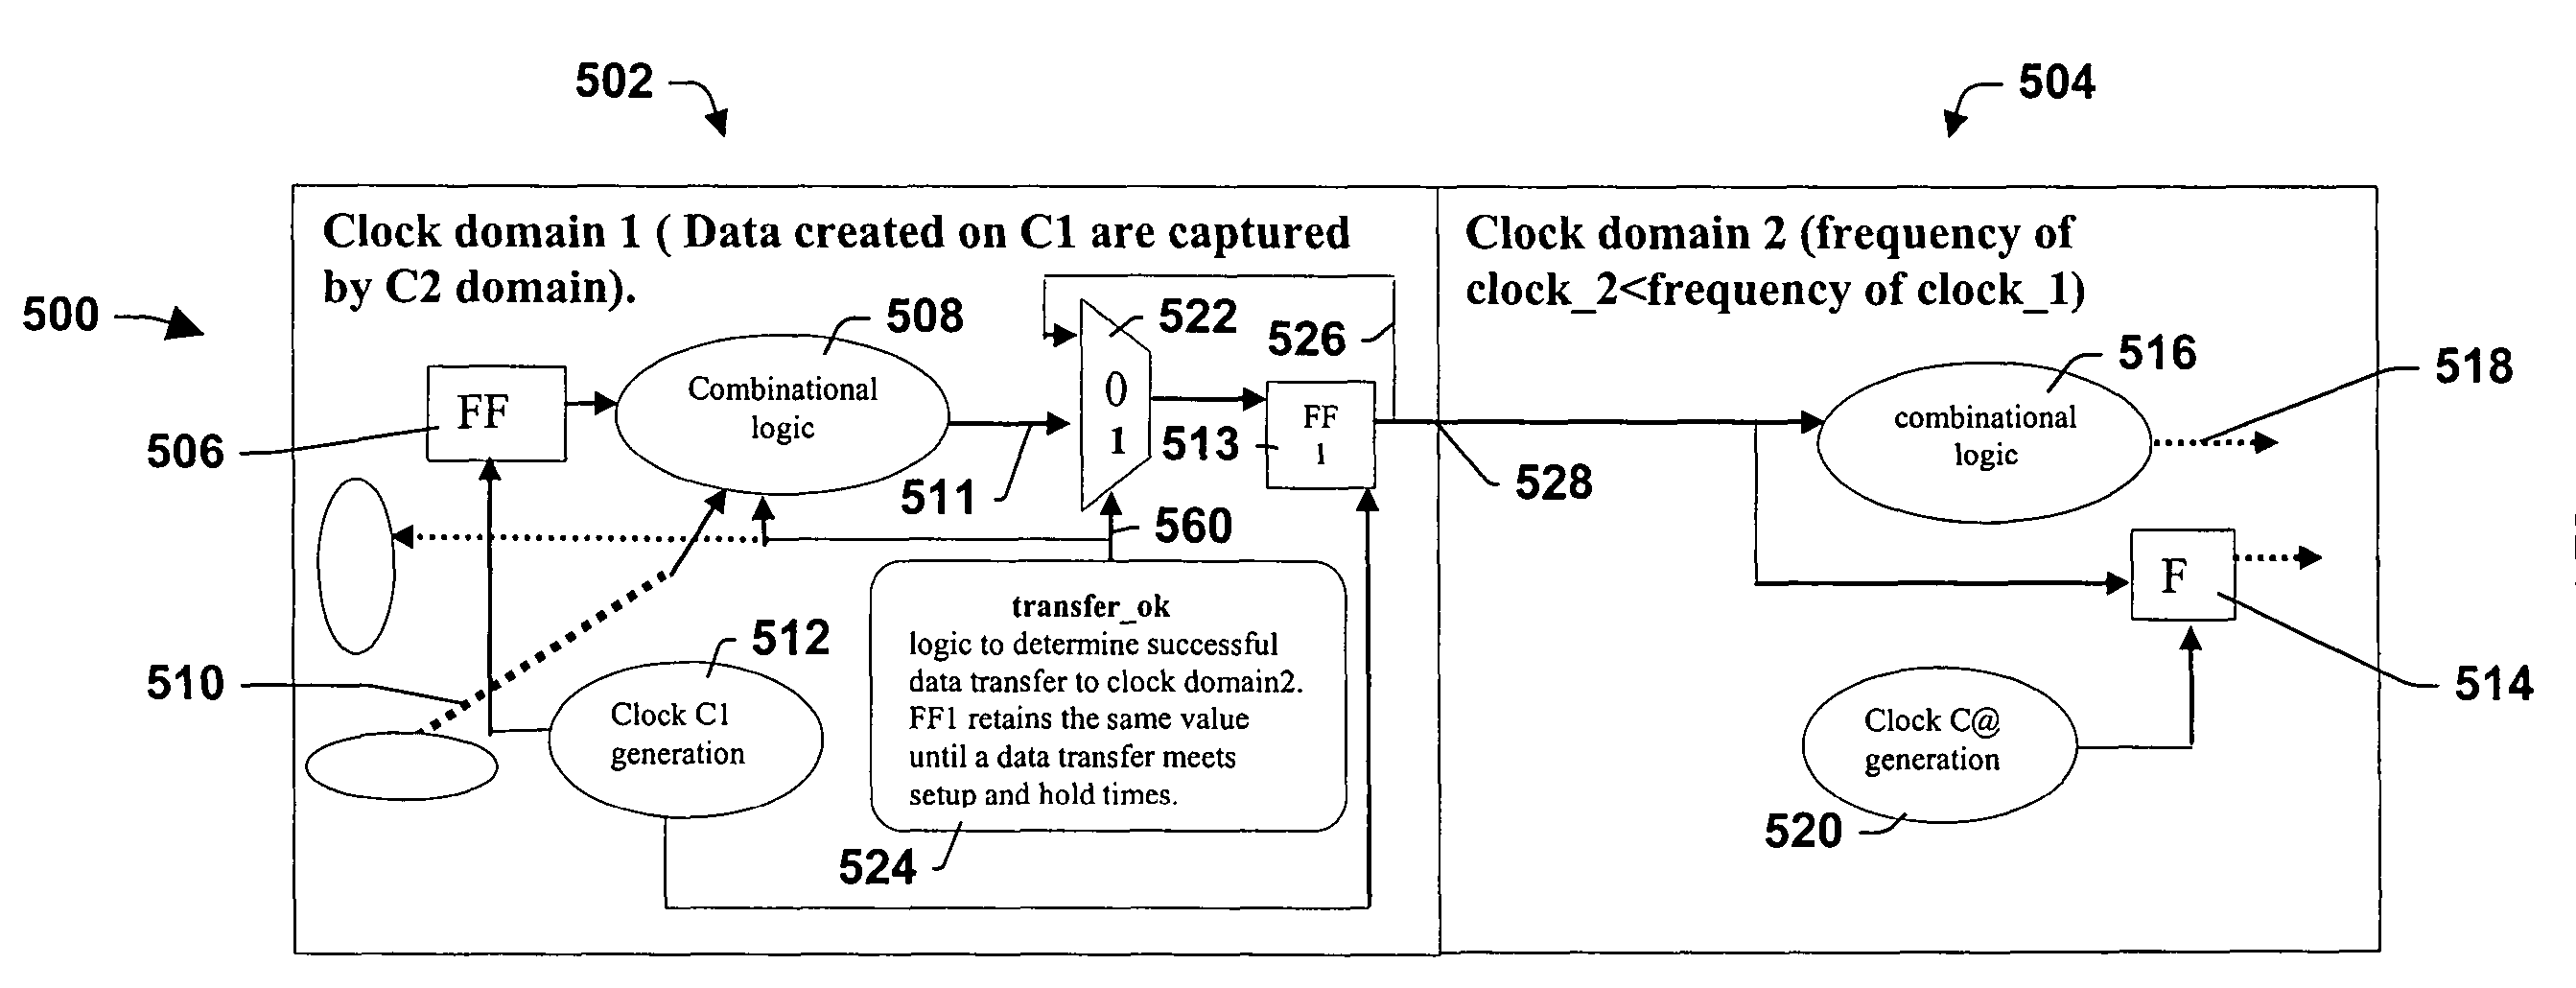 Digital data transfer between different clock domains